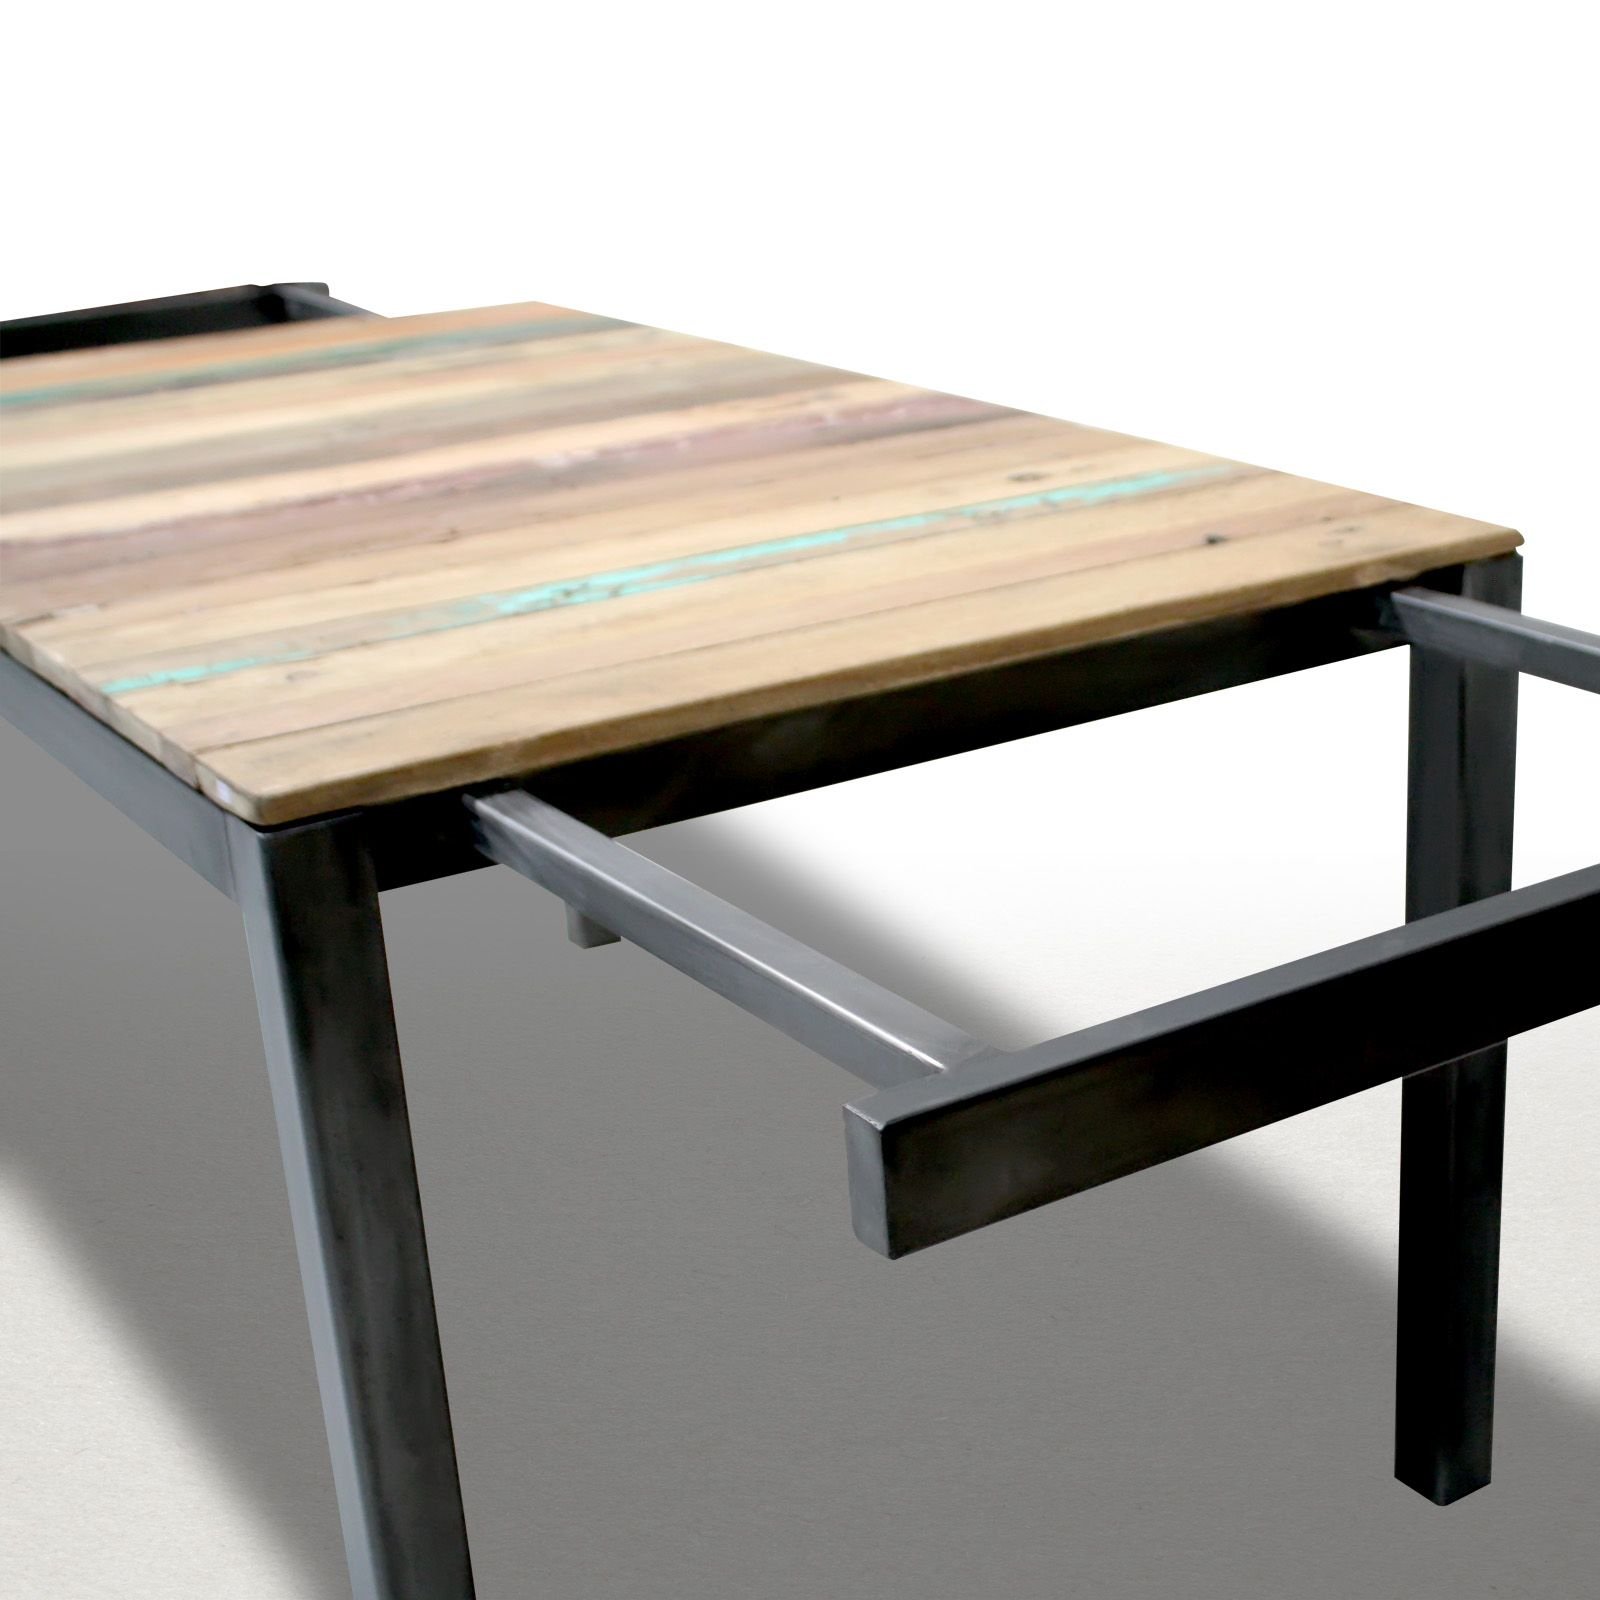 Железный кухонный стол. Раскладной стол металл дерево 1230х940. Unico Metall откидной стол. Откидной стол лофт. Раскладной стол из металла.